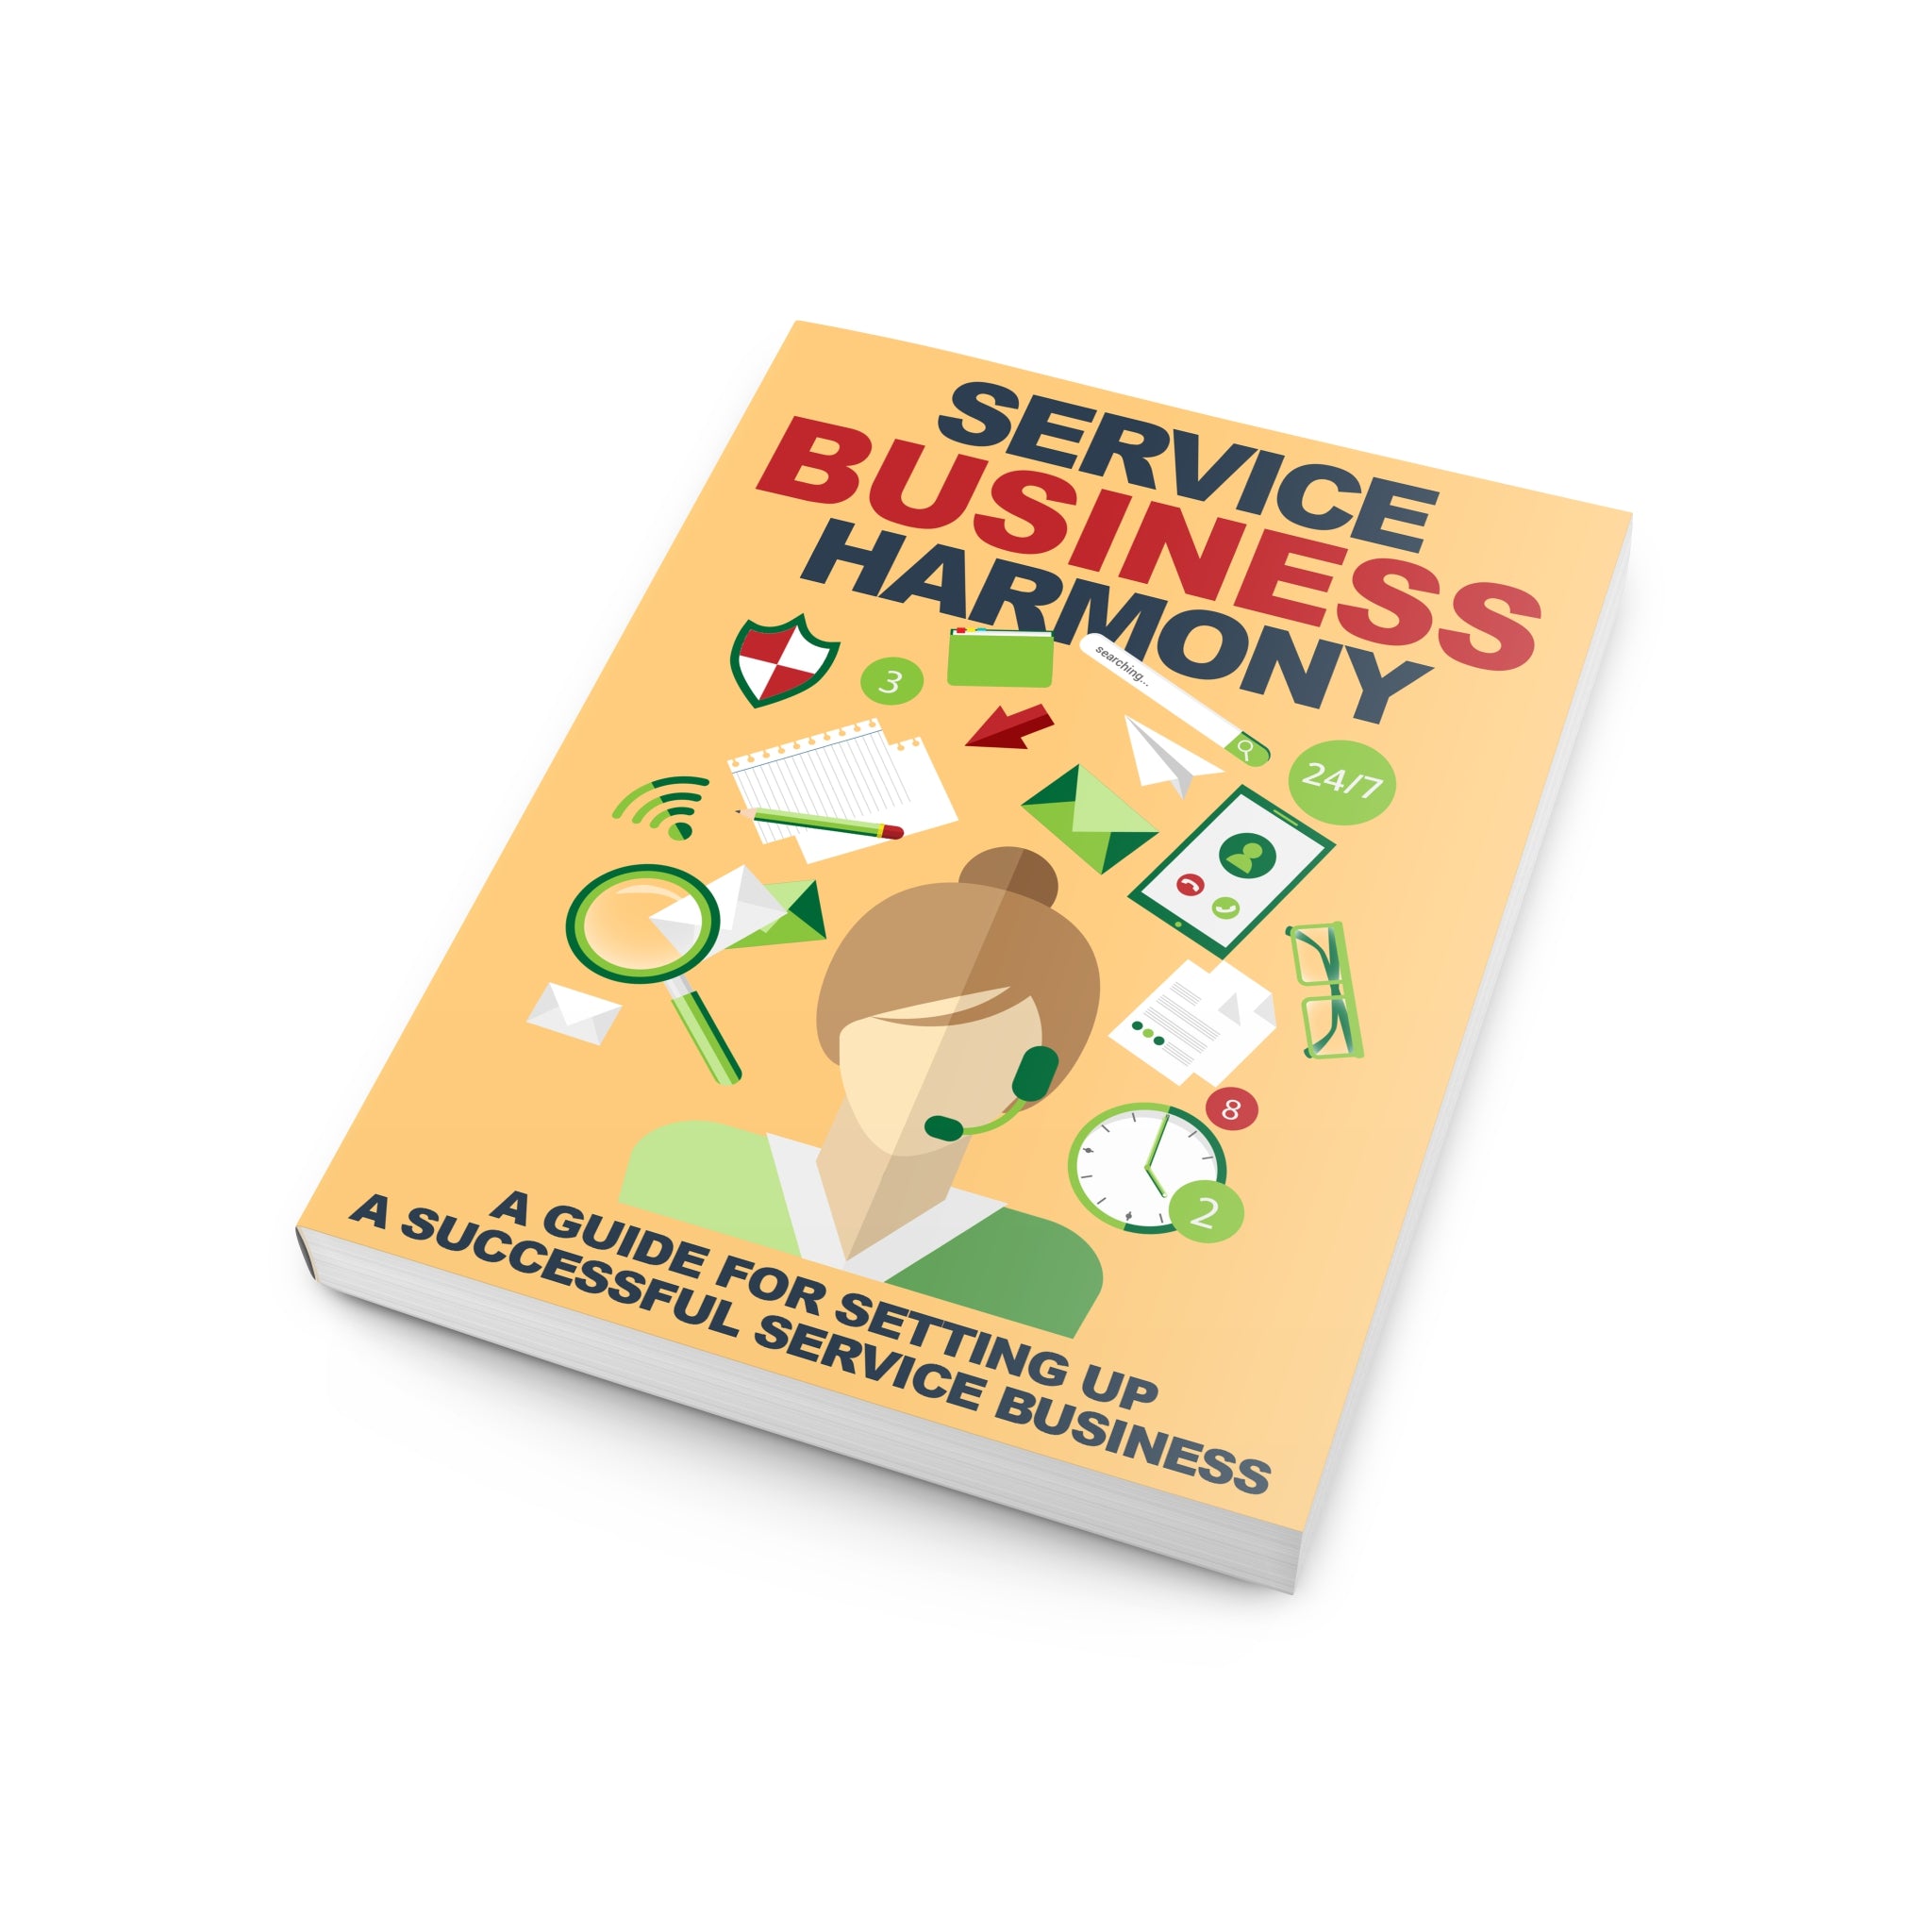 Service Business Harmony Ebook